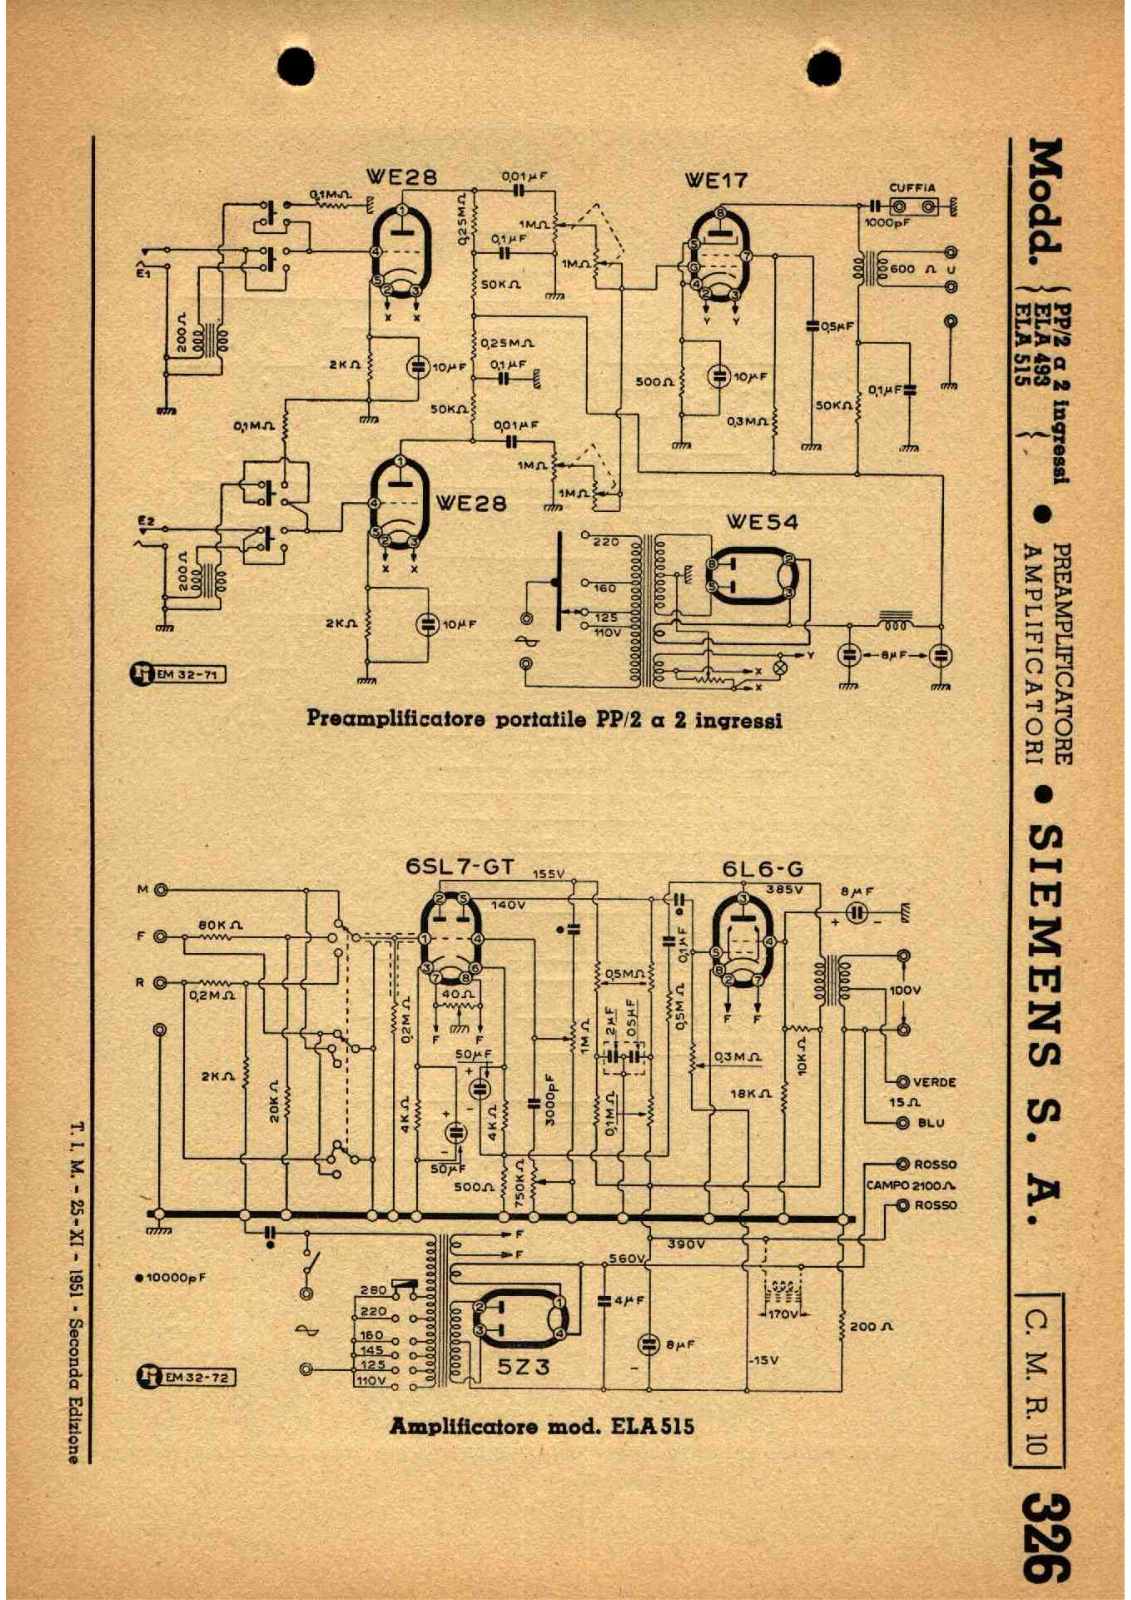 Siemens pp 2 ela515 schematic